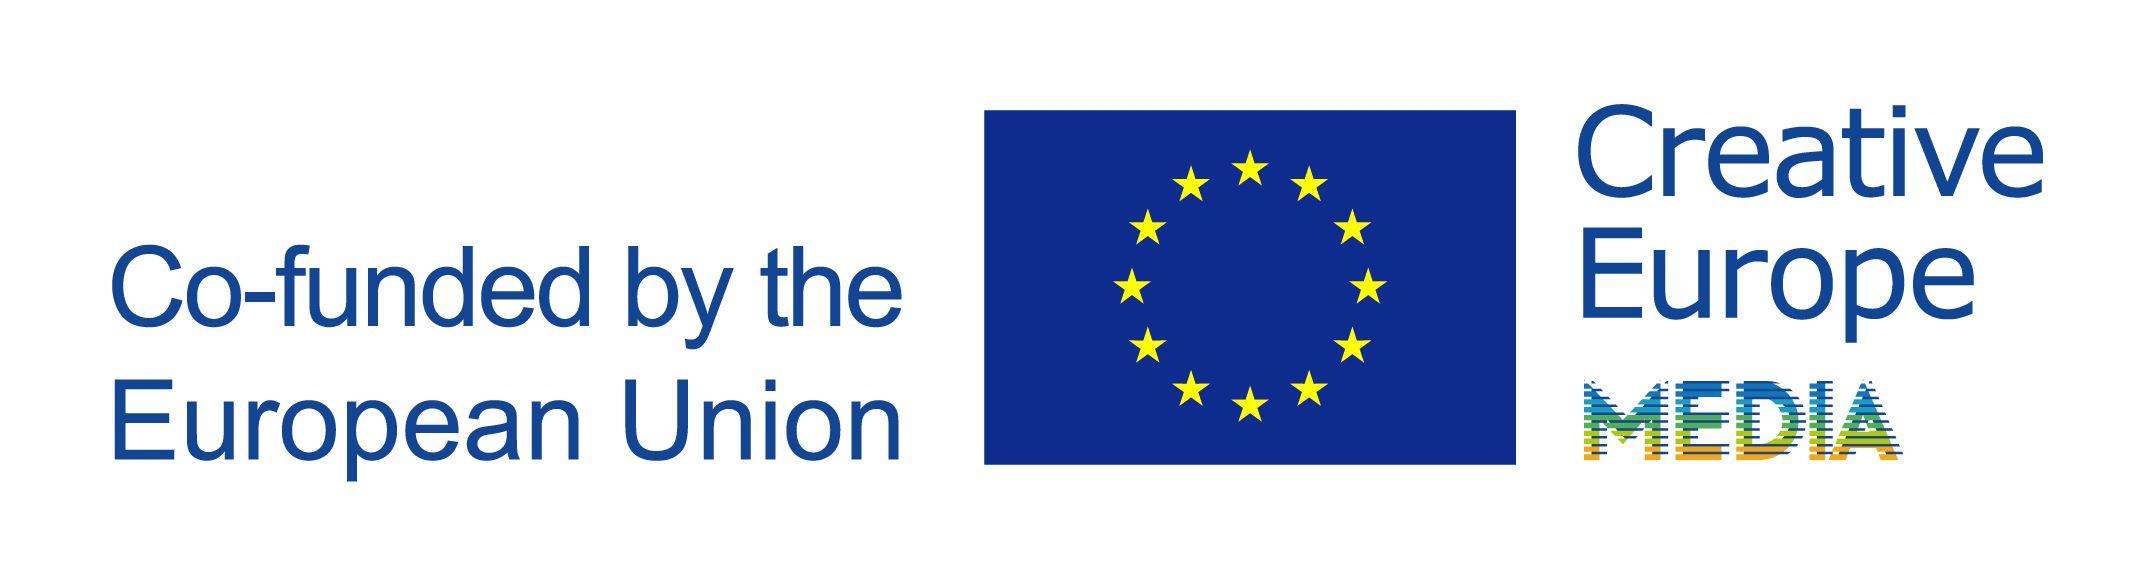 Eu Logo - Creative Europe: Visual identity and logos